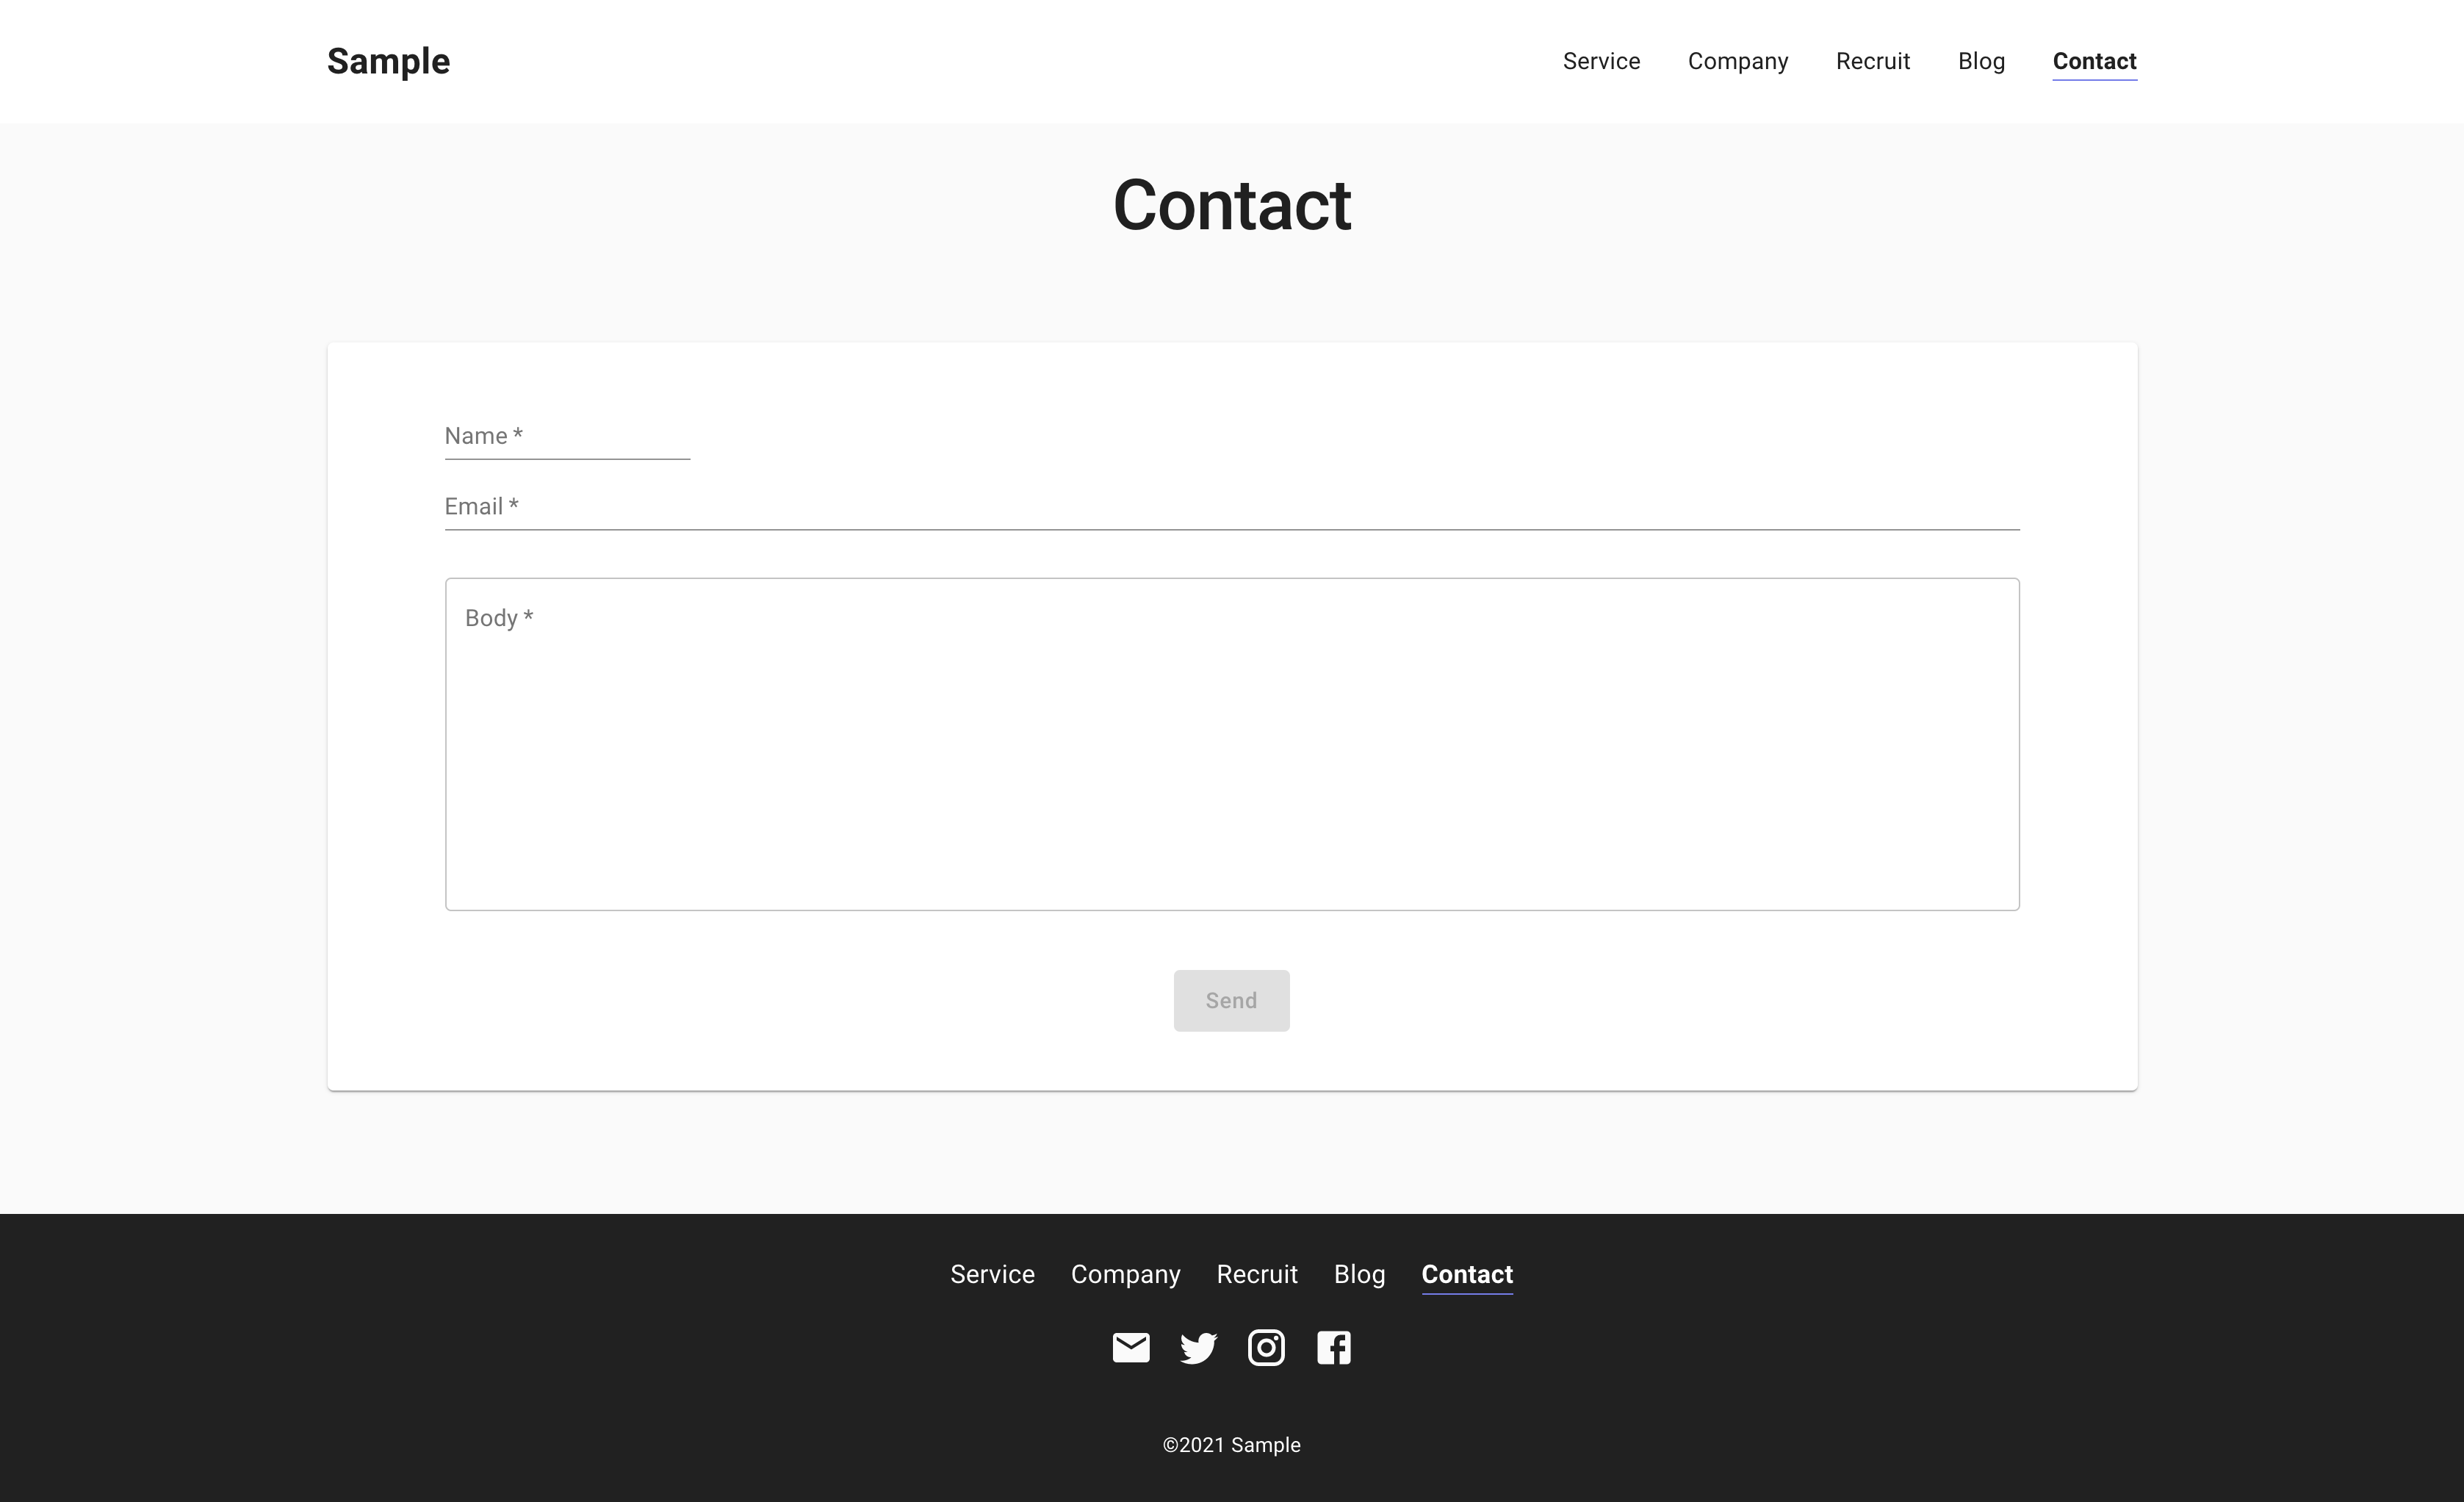 FireShot Capture 105 - Contact - Sample - corporate-site-sample.vercel.app.png